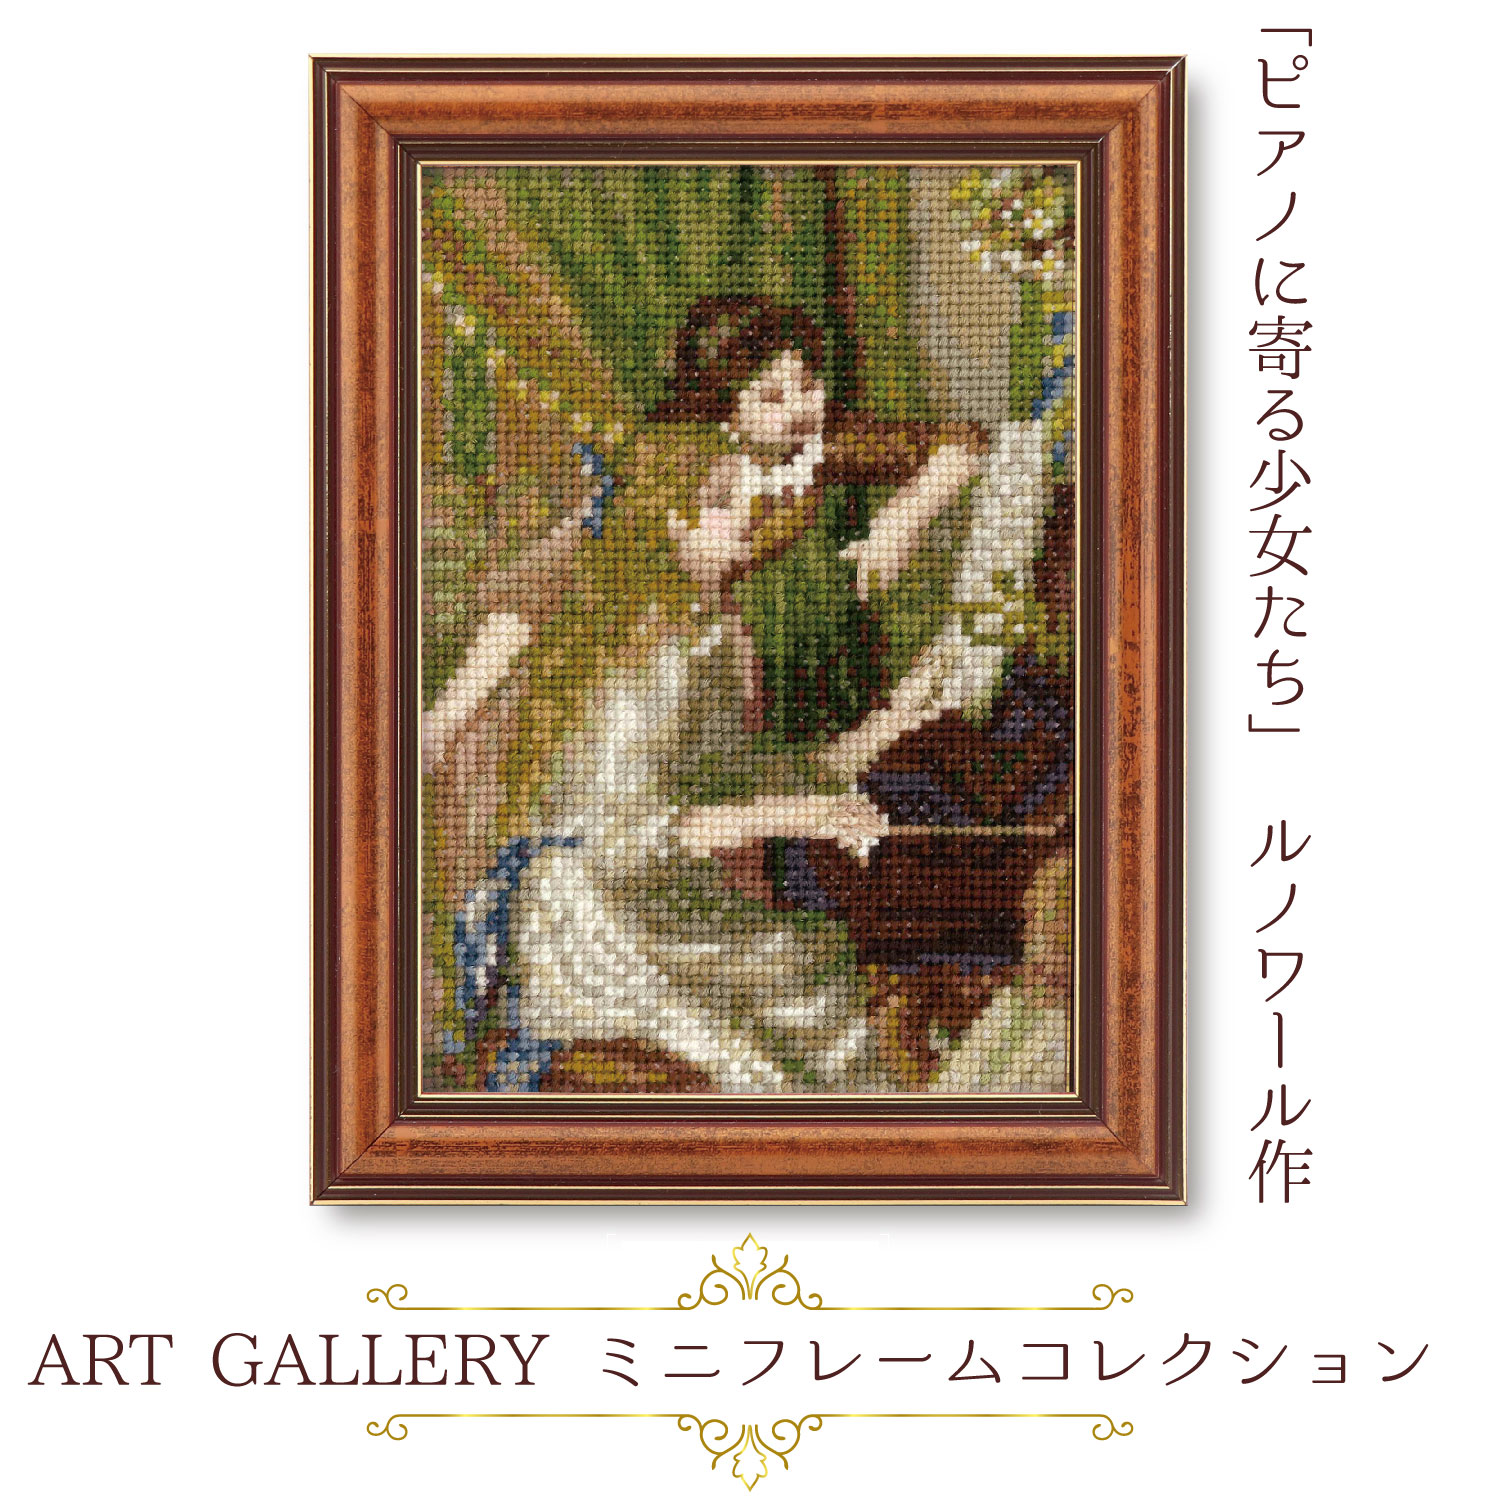 OLY-K7587 オリムパスクロスステッチ刺繍キット ART GALLERY ミニフレームコレクション 「ピアノに寄る少女たち」 ルノワール作 (個)